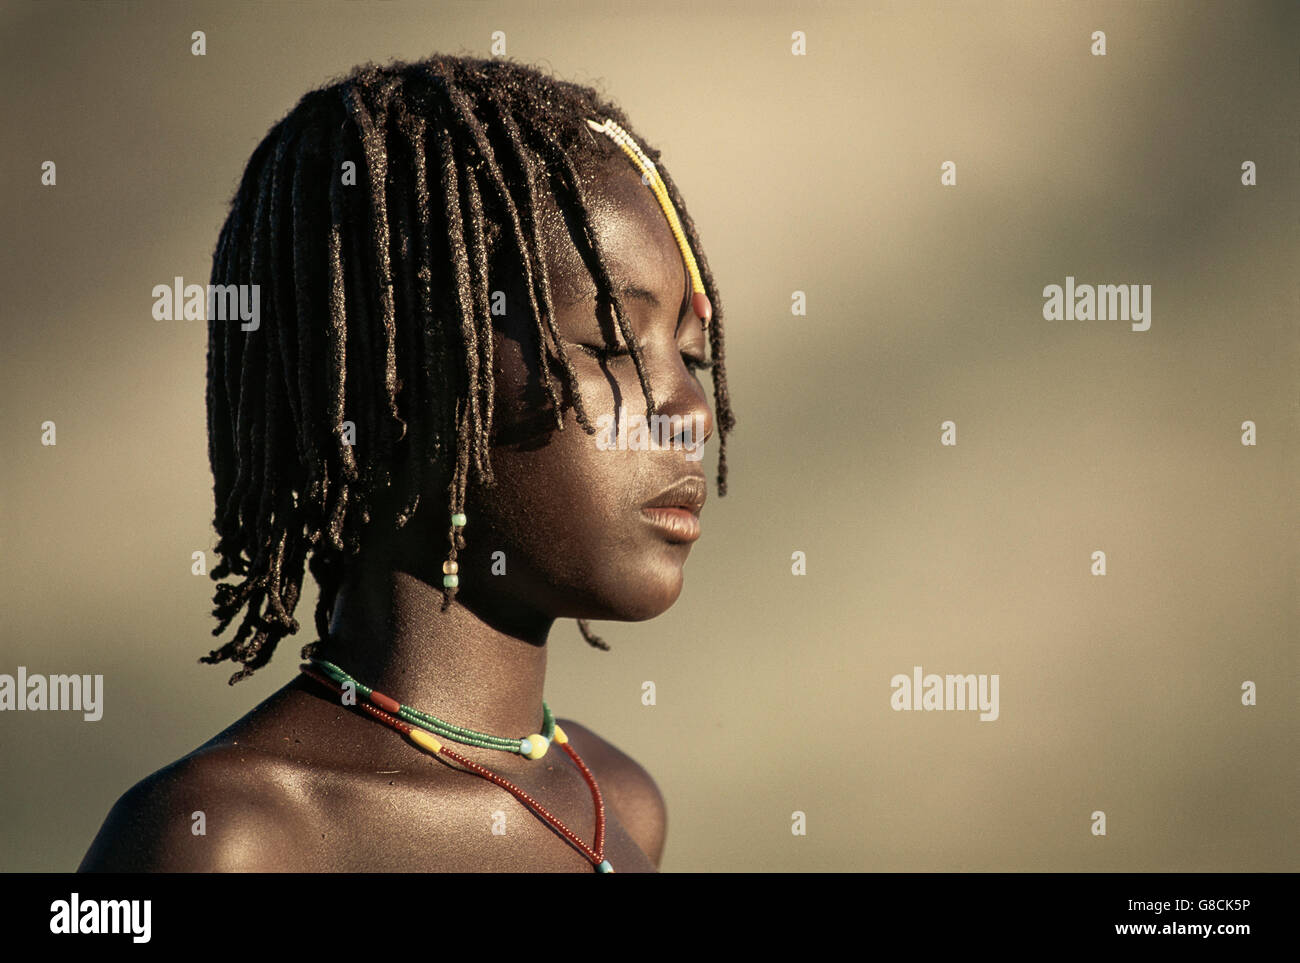 Young Himba girl, Namibia, Art. Stock Photo